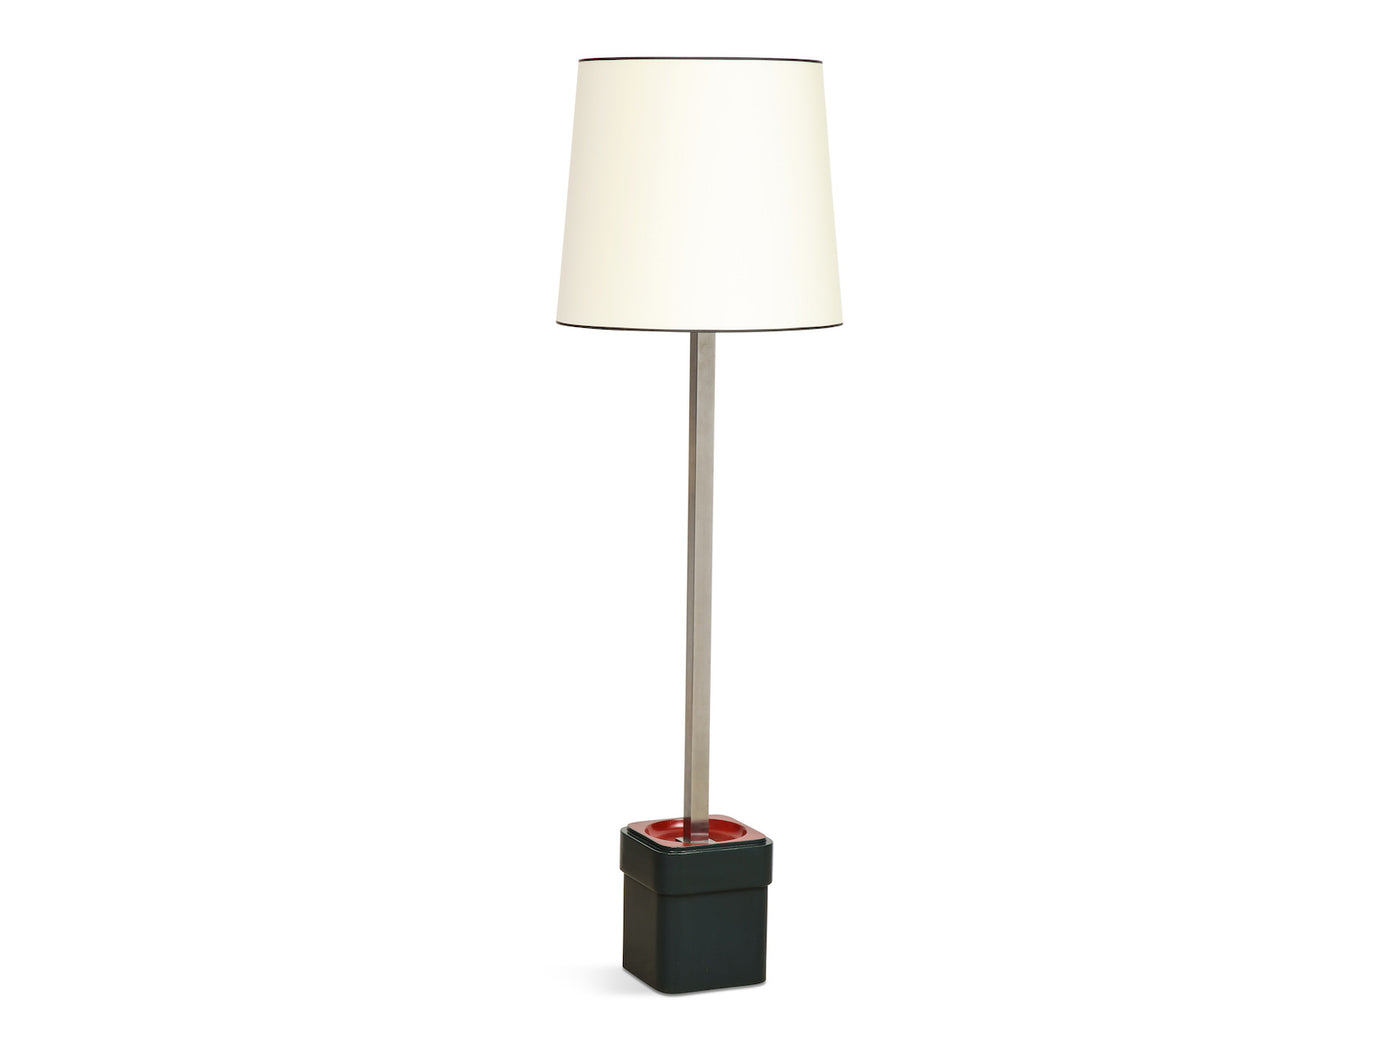 Custom Designed Floor Lamp By Paul László